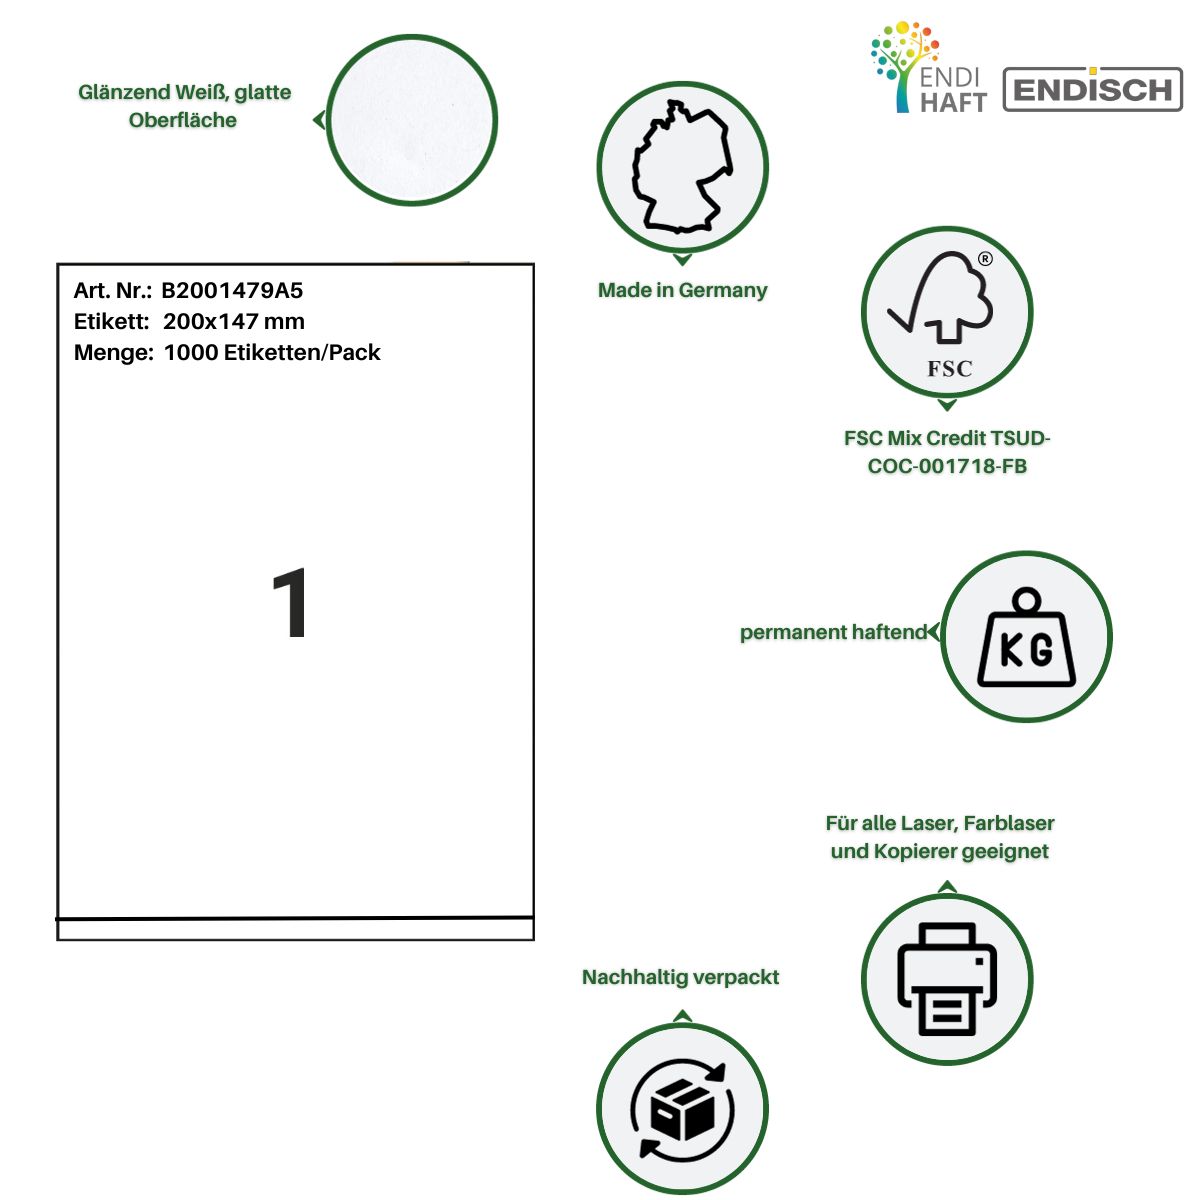 ENDI-HAFT Etiketten, Etikettenbögen DIN A5, weiß, glänzend, 1000 Etiketten, 1000 Blatt/Pack